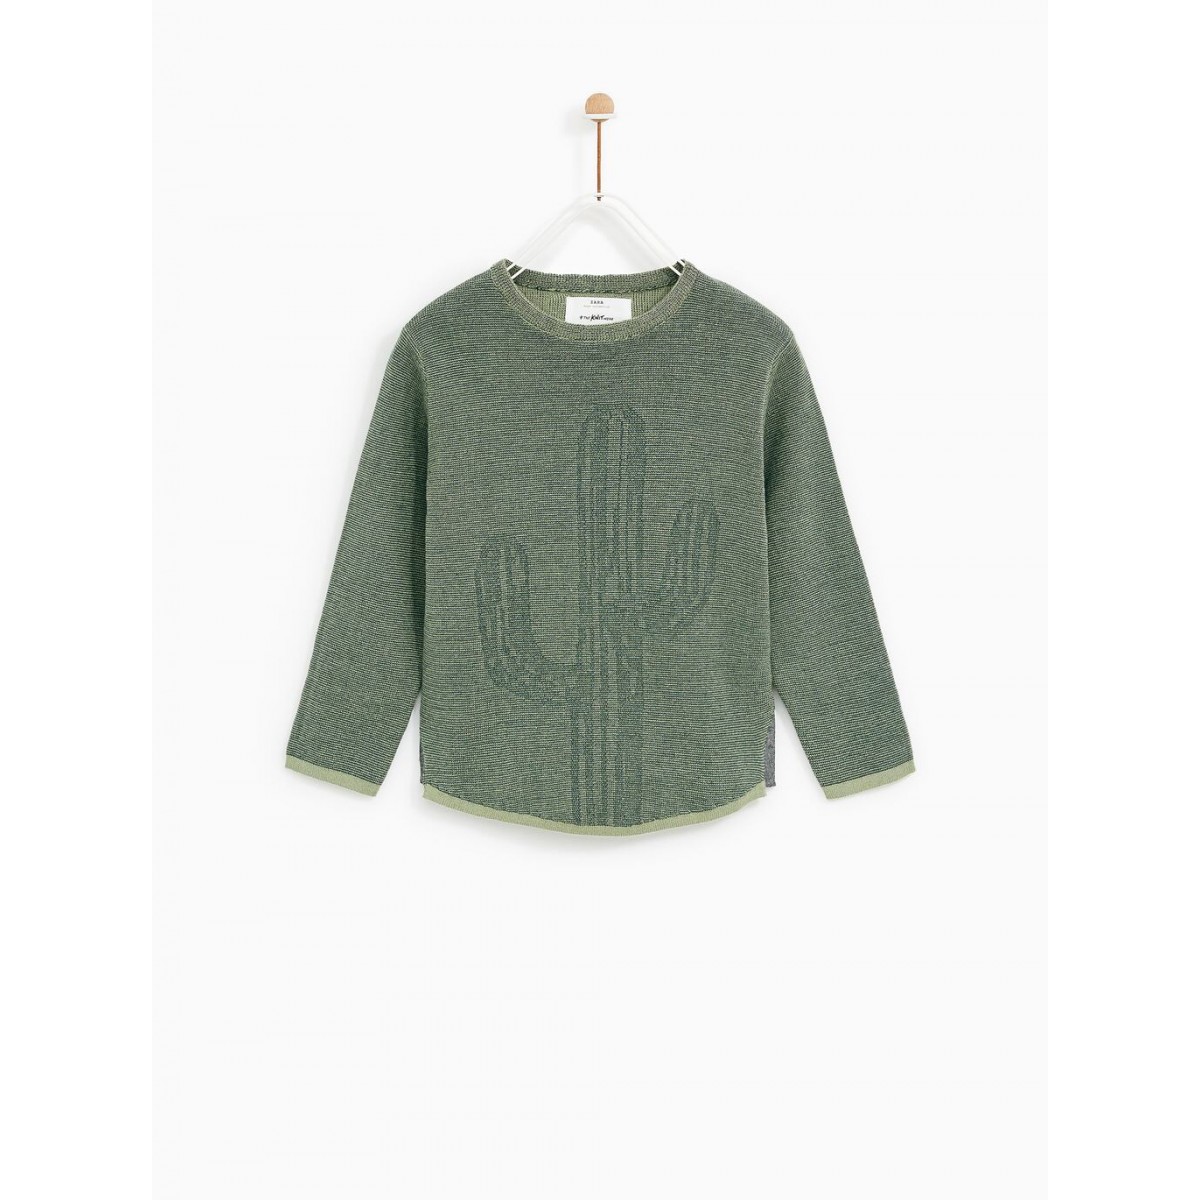 Zara Jacquard Cactus Sweater